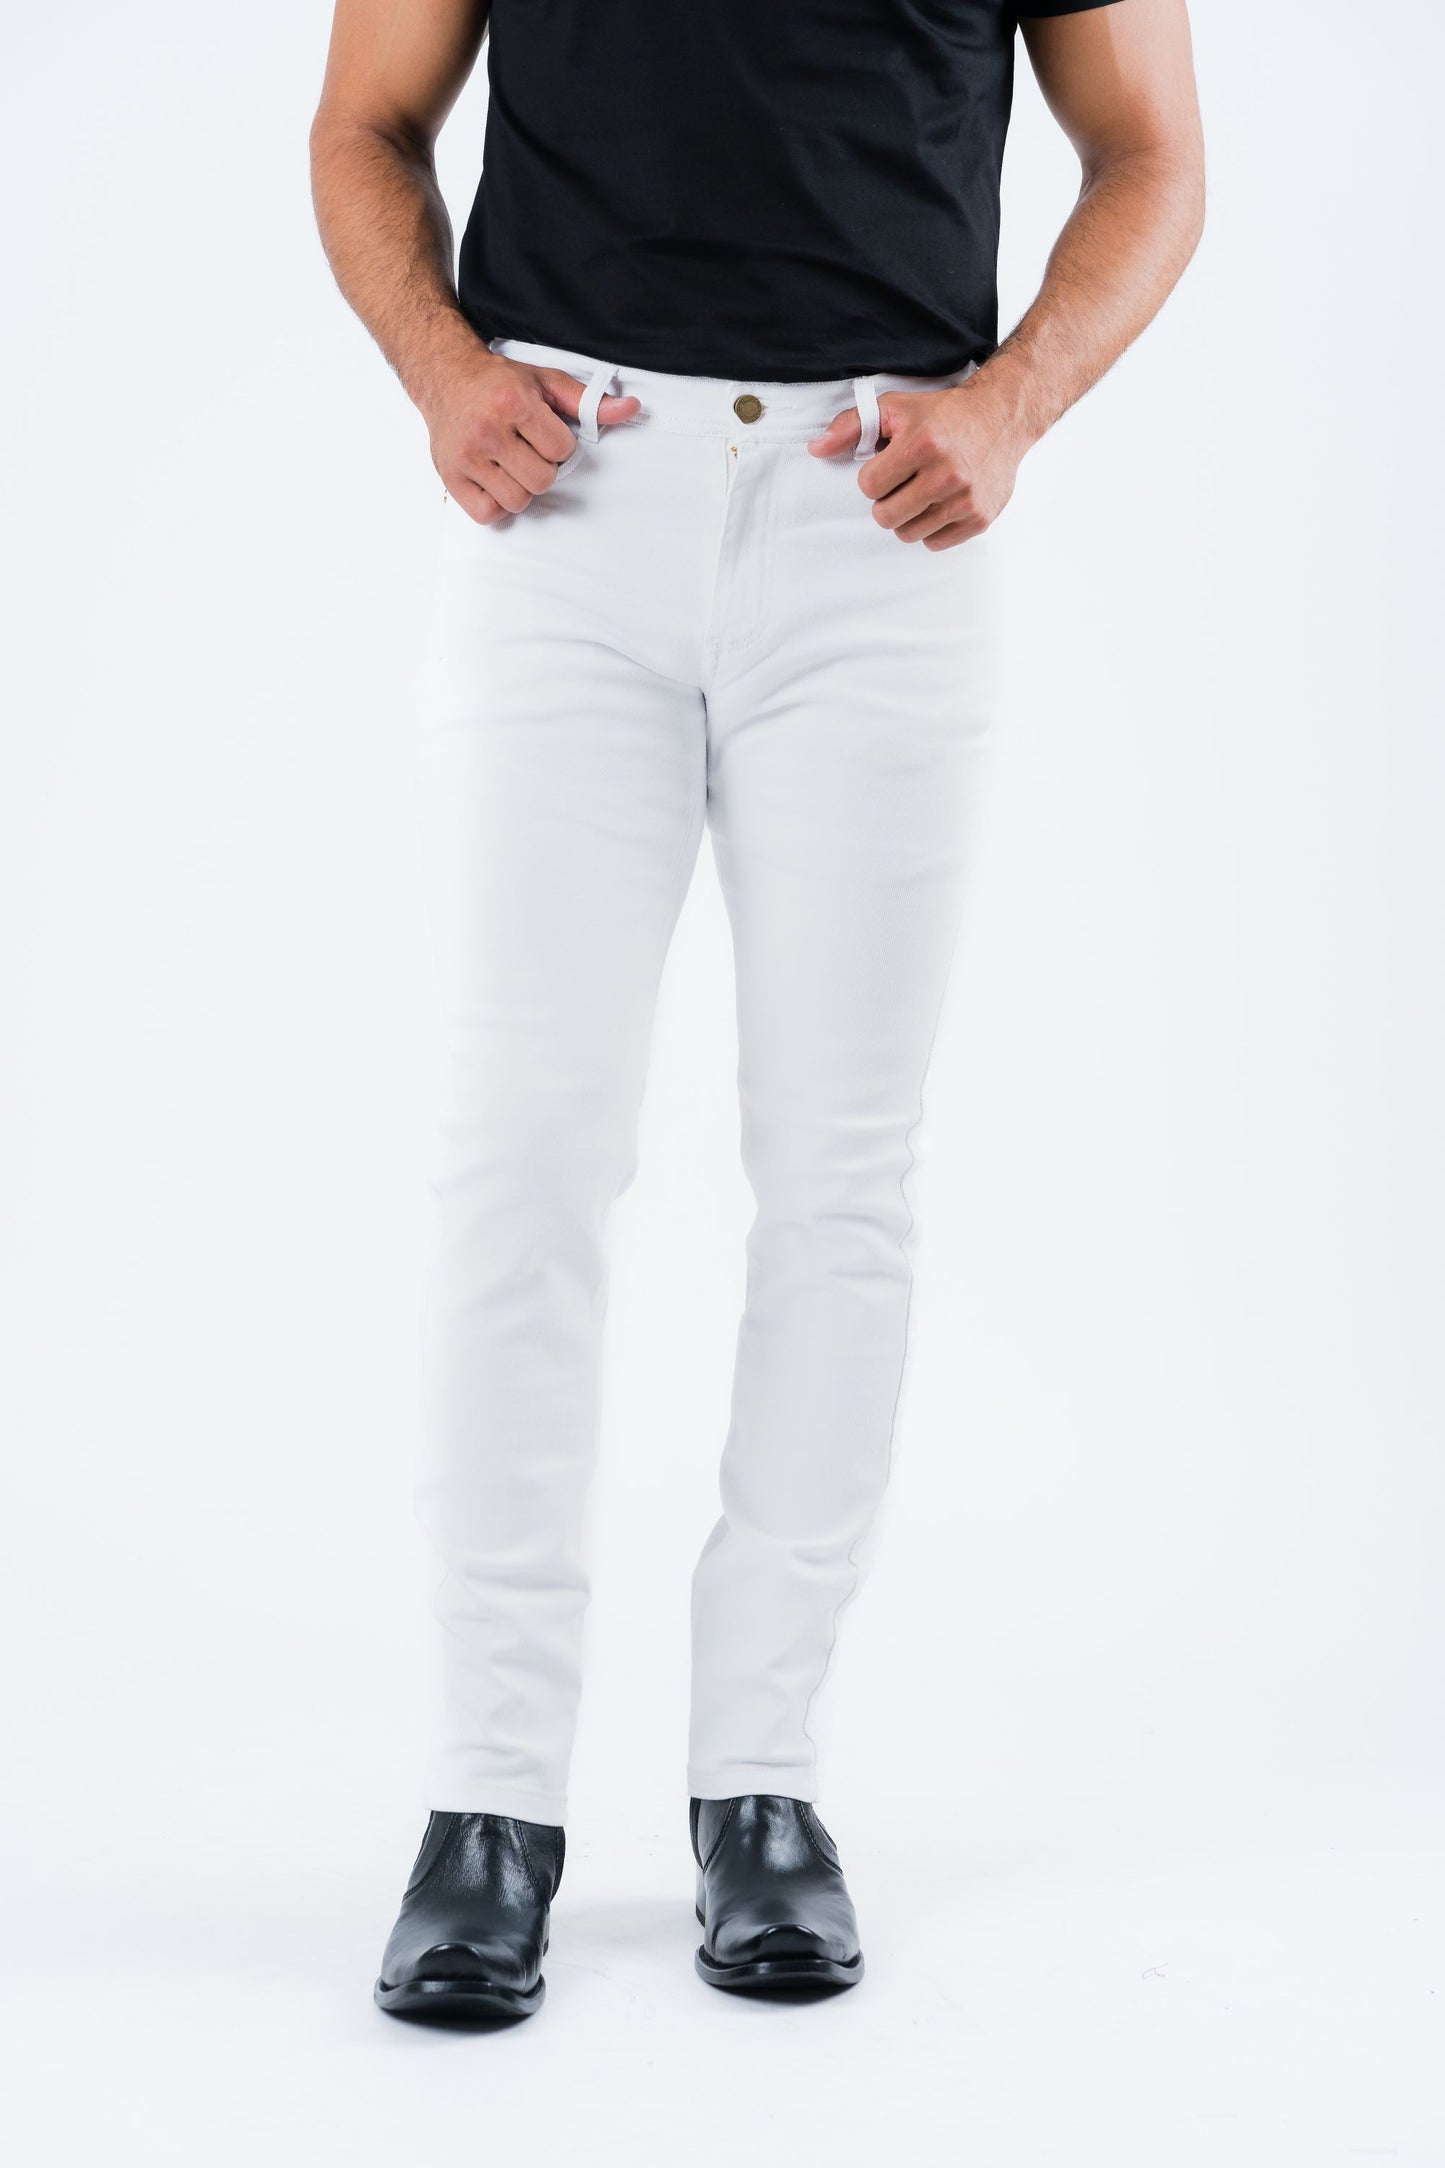 Pax Men's White Slim Stretch Jeans